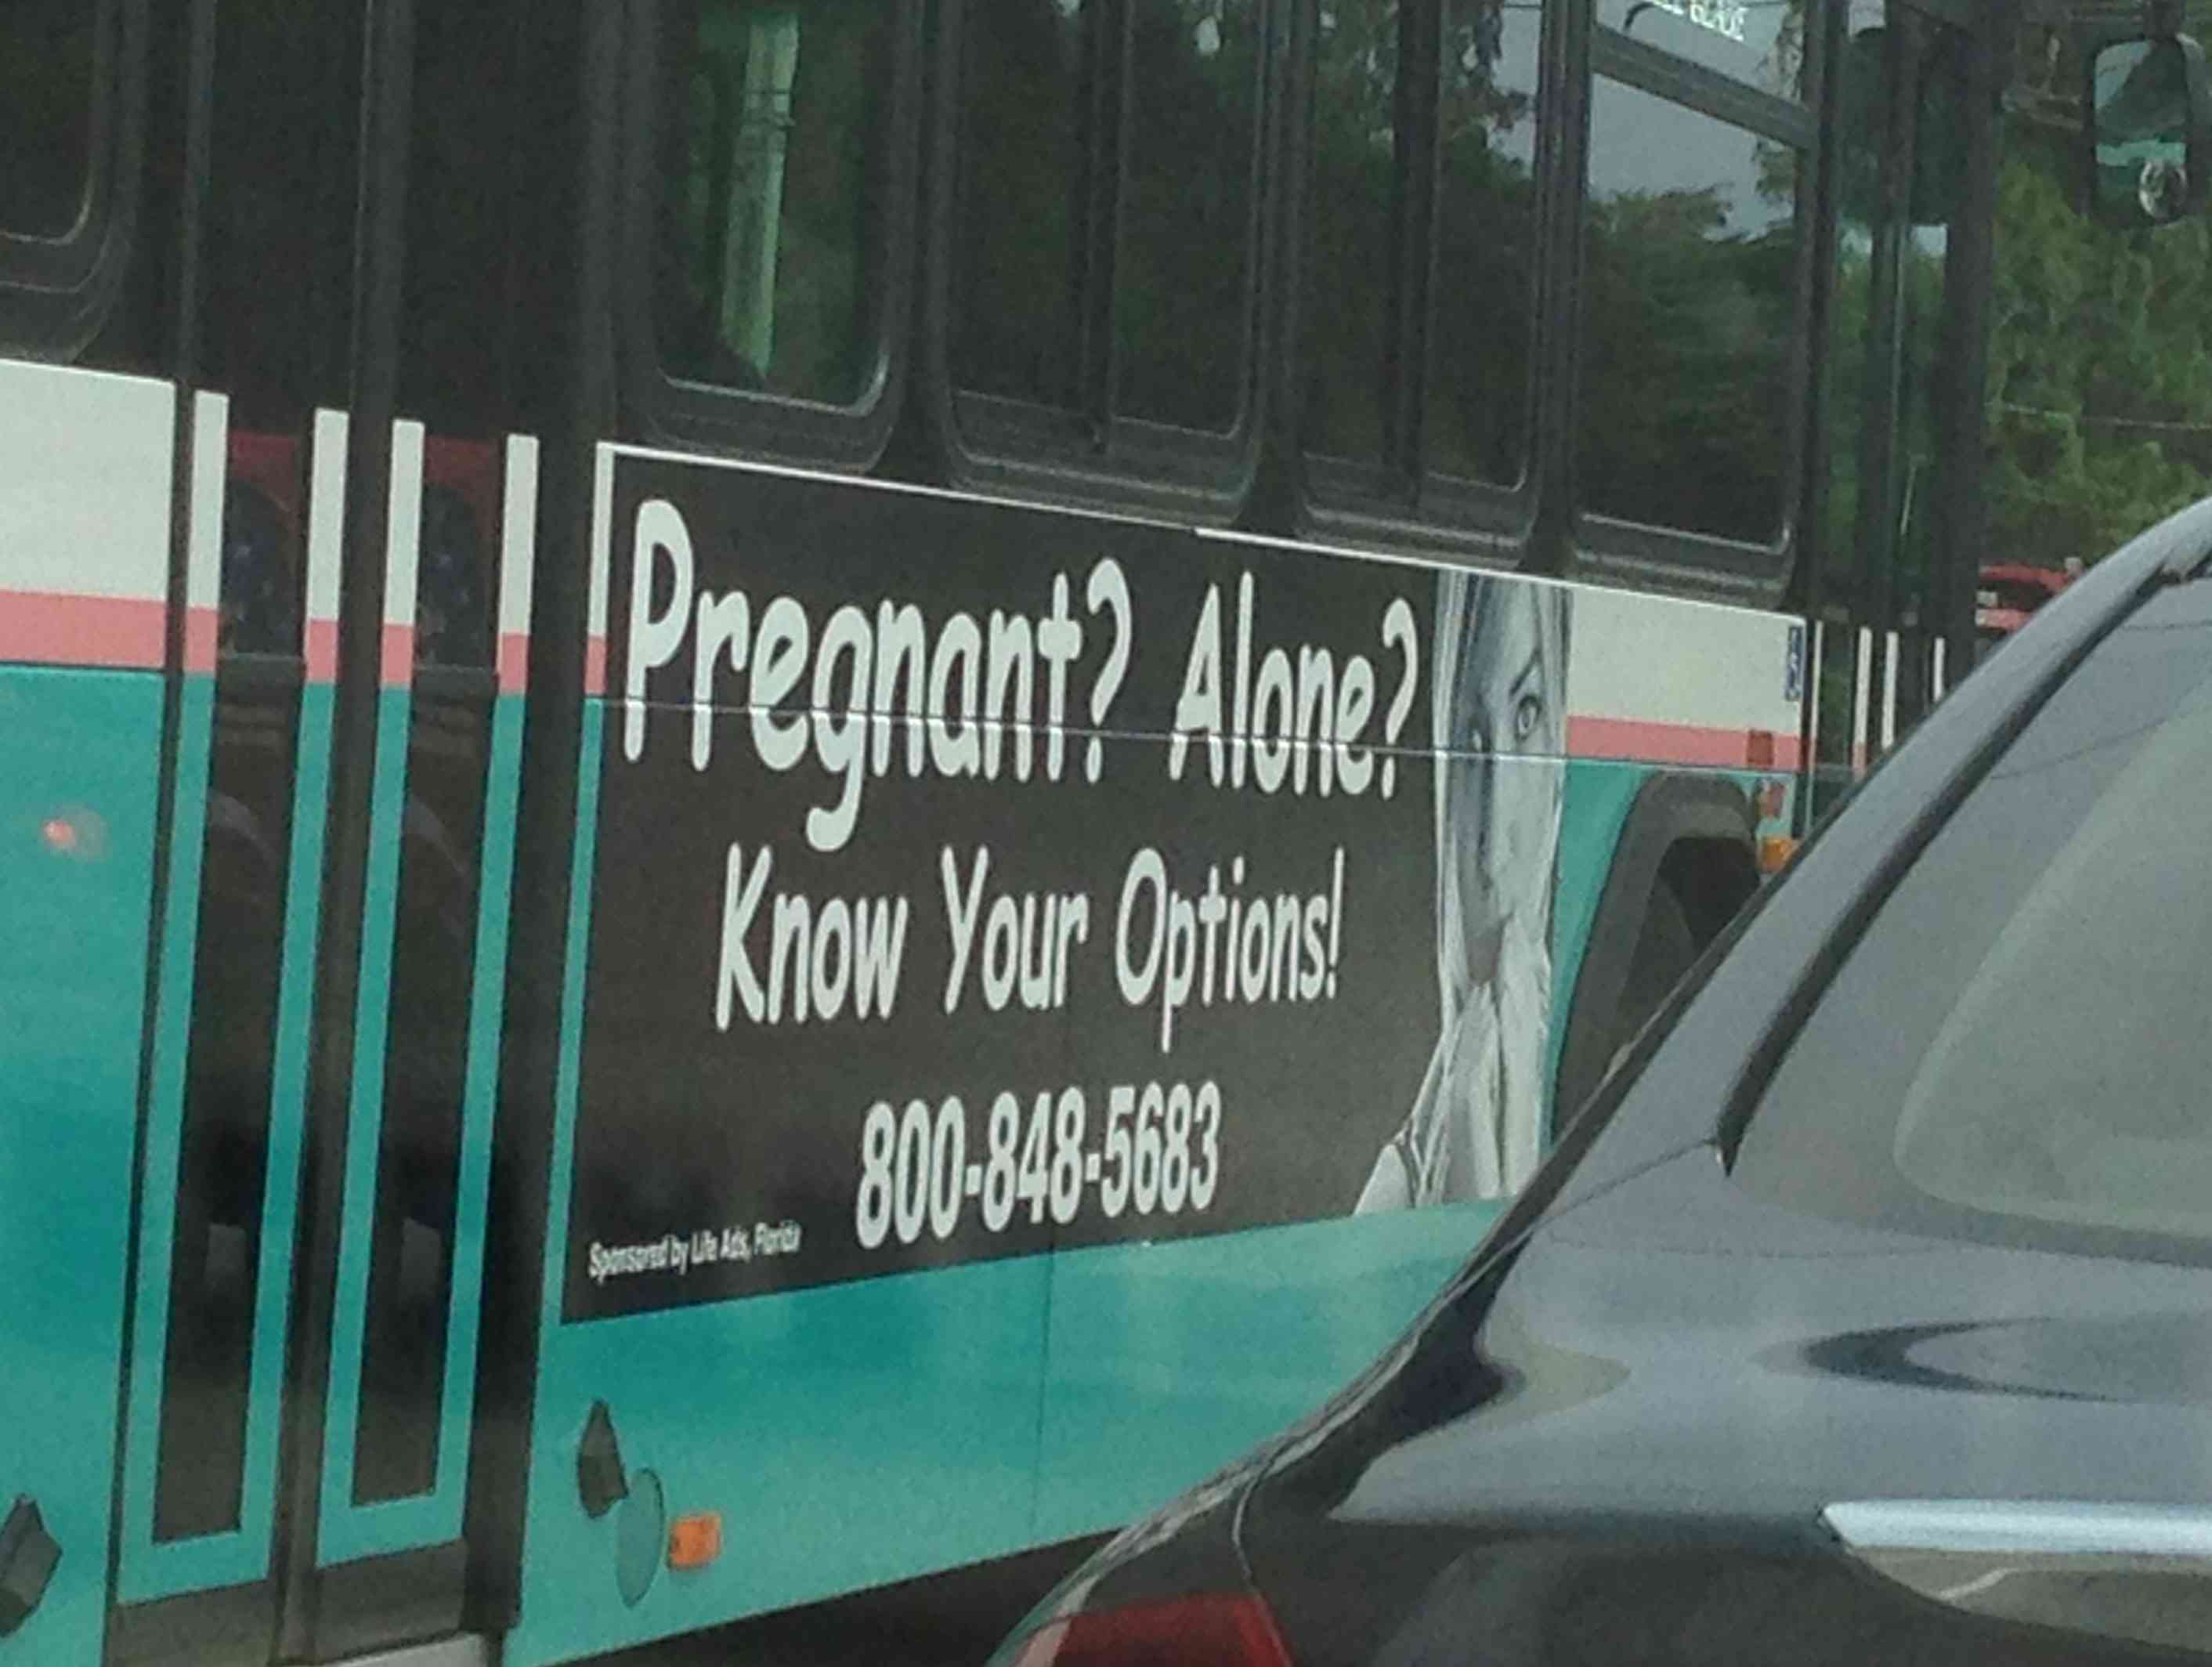 crisis pregnancy center advertisement